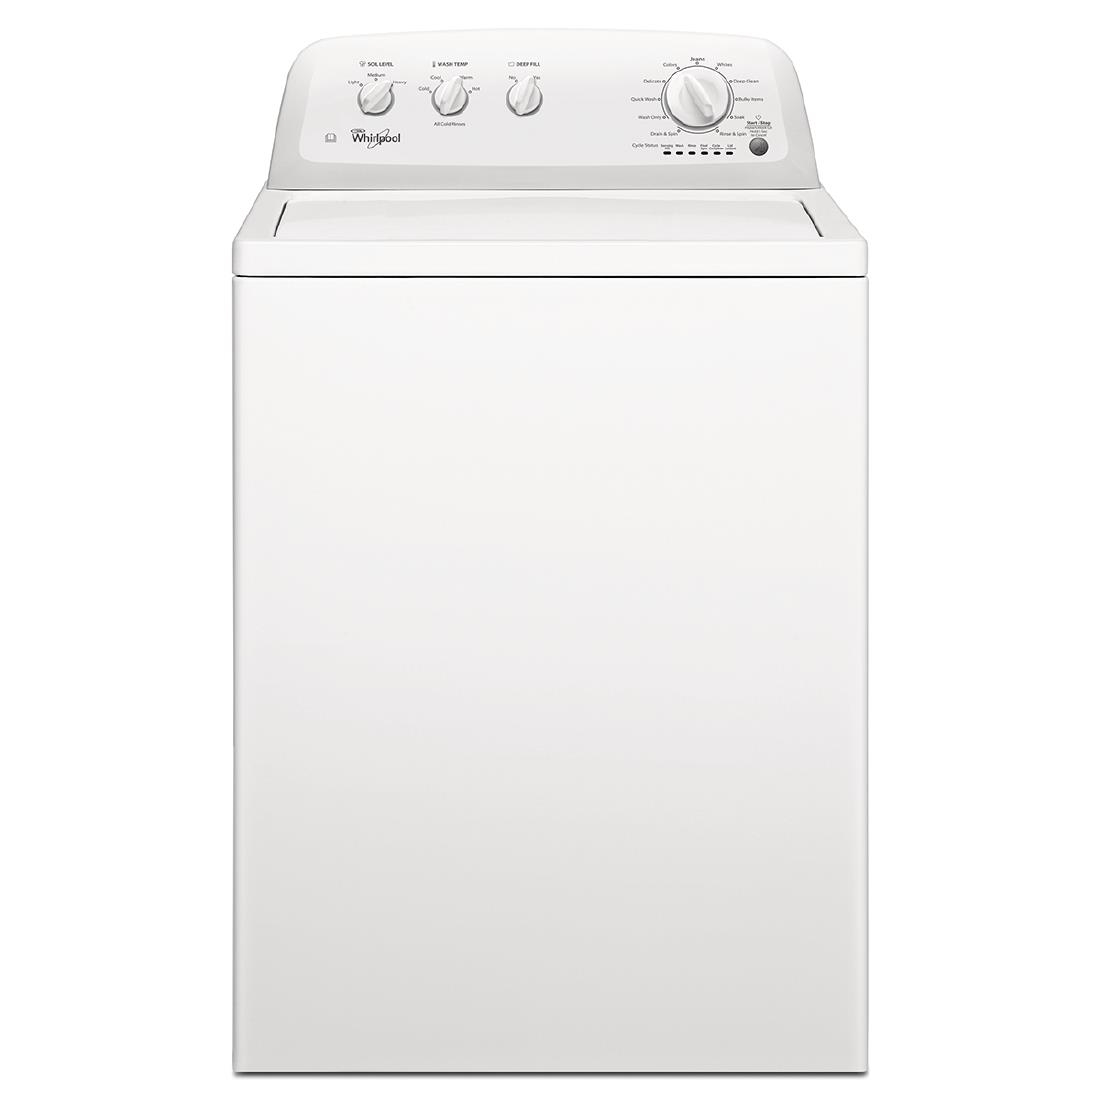 Whirlpool American Style Top Loader Washing Machine 15kg - HC591